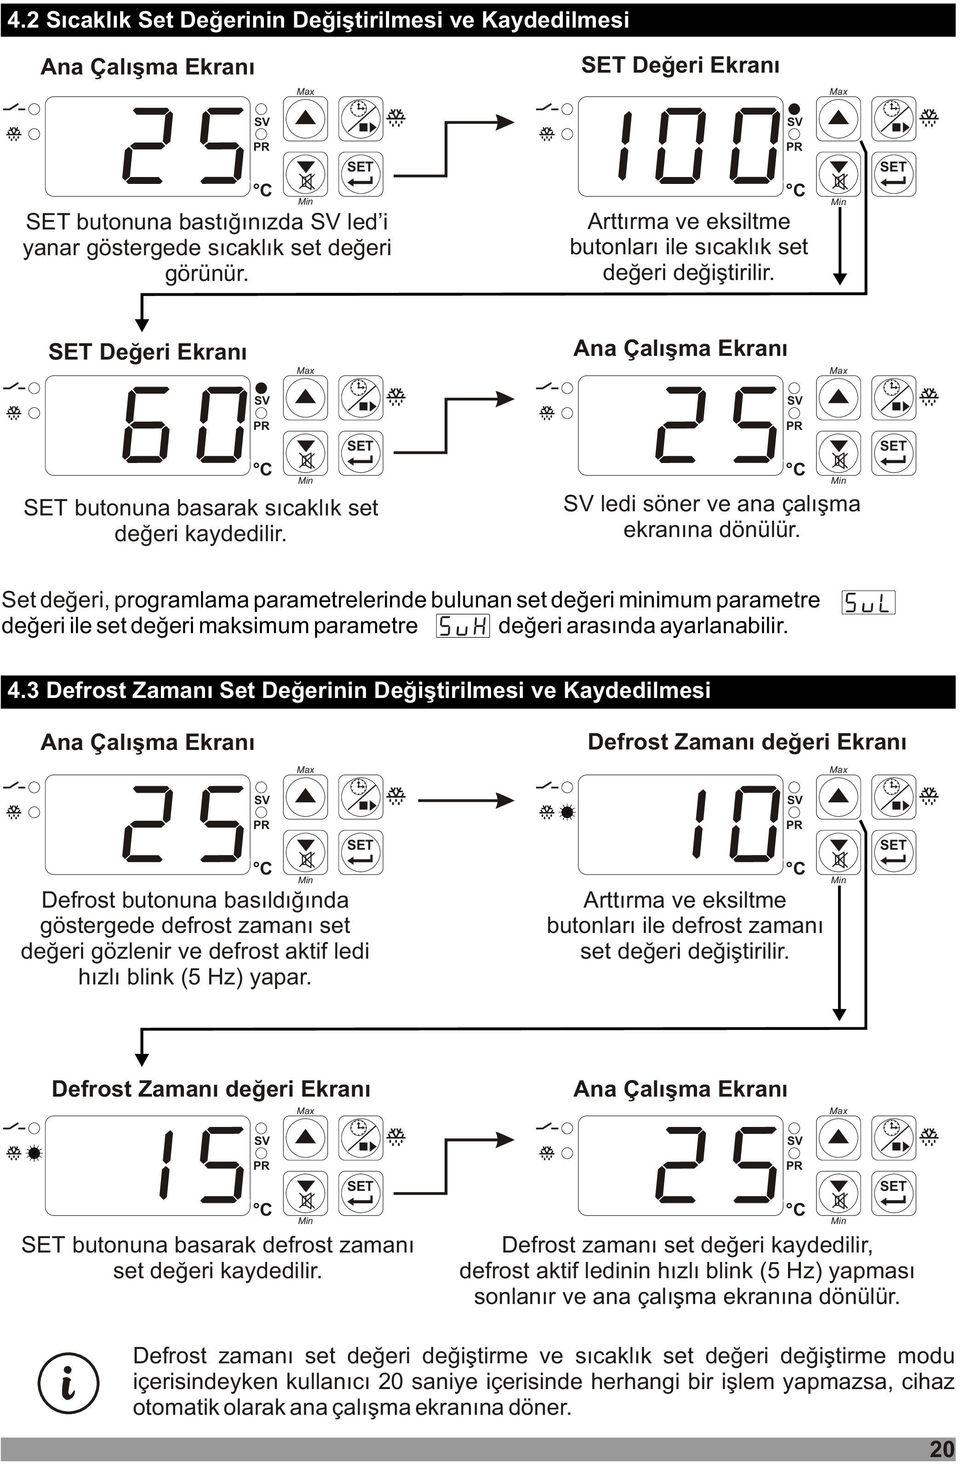 Set deðeri, programlama parametrelerinde bulunan set deðeri minimum parametre deðeri ile set deðeri maksimum parametre deðeri arasýnda ayarlanabilir. 4.